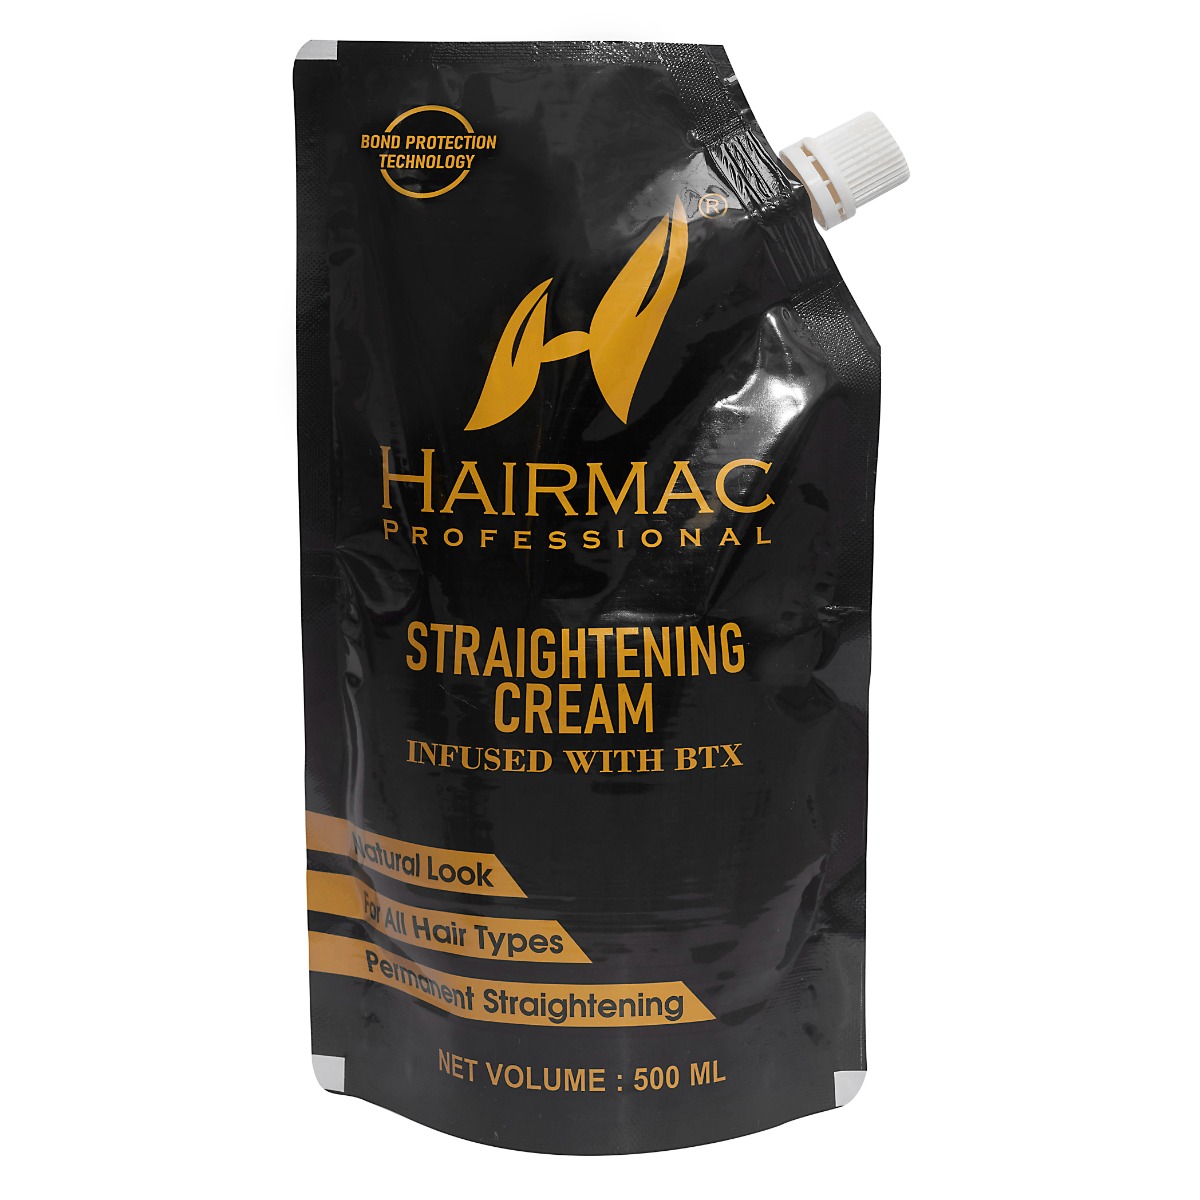 Hairmac Professional Straightening Cream - 500 ml